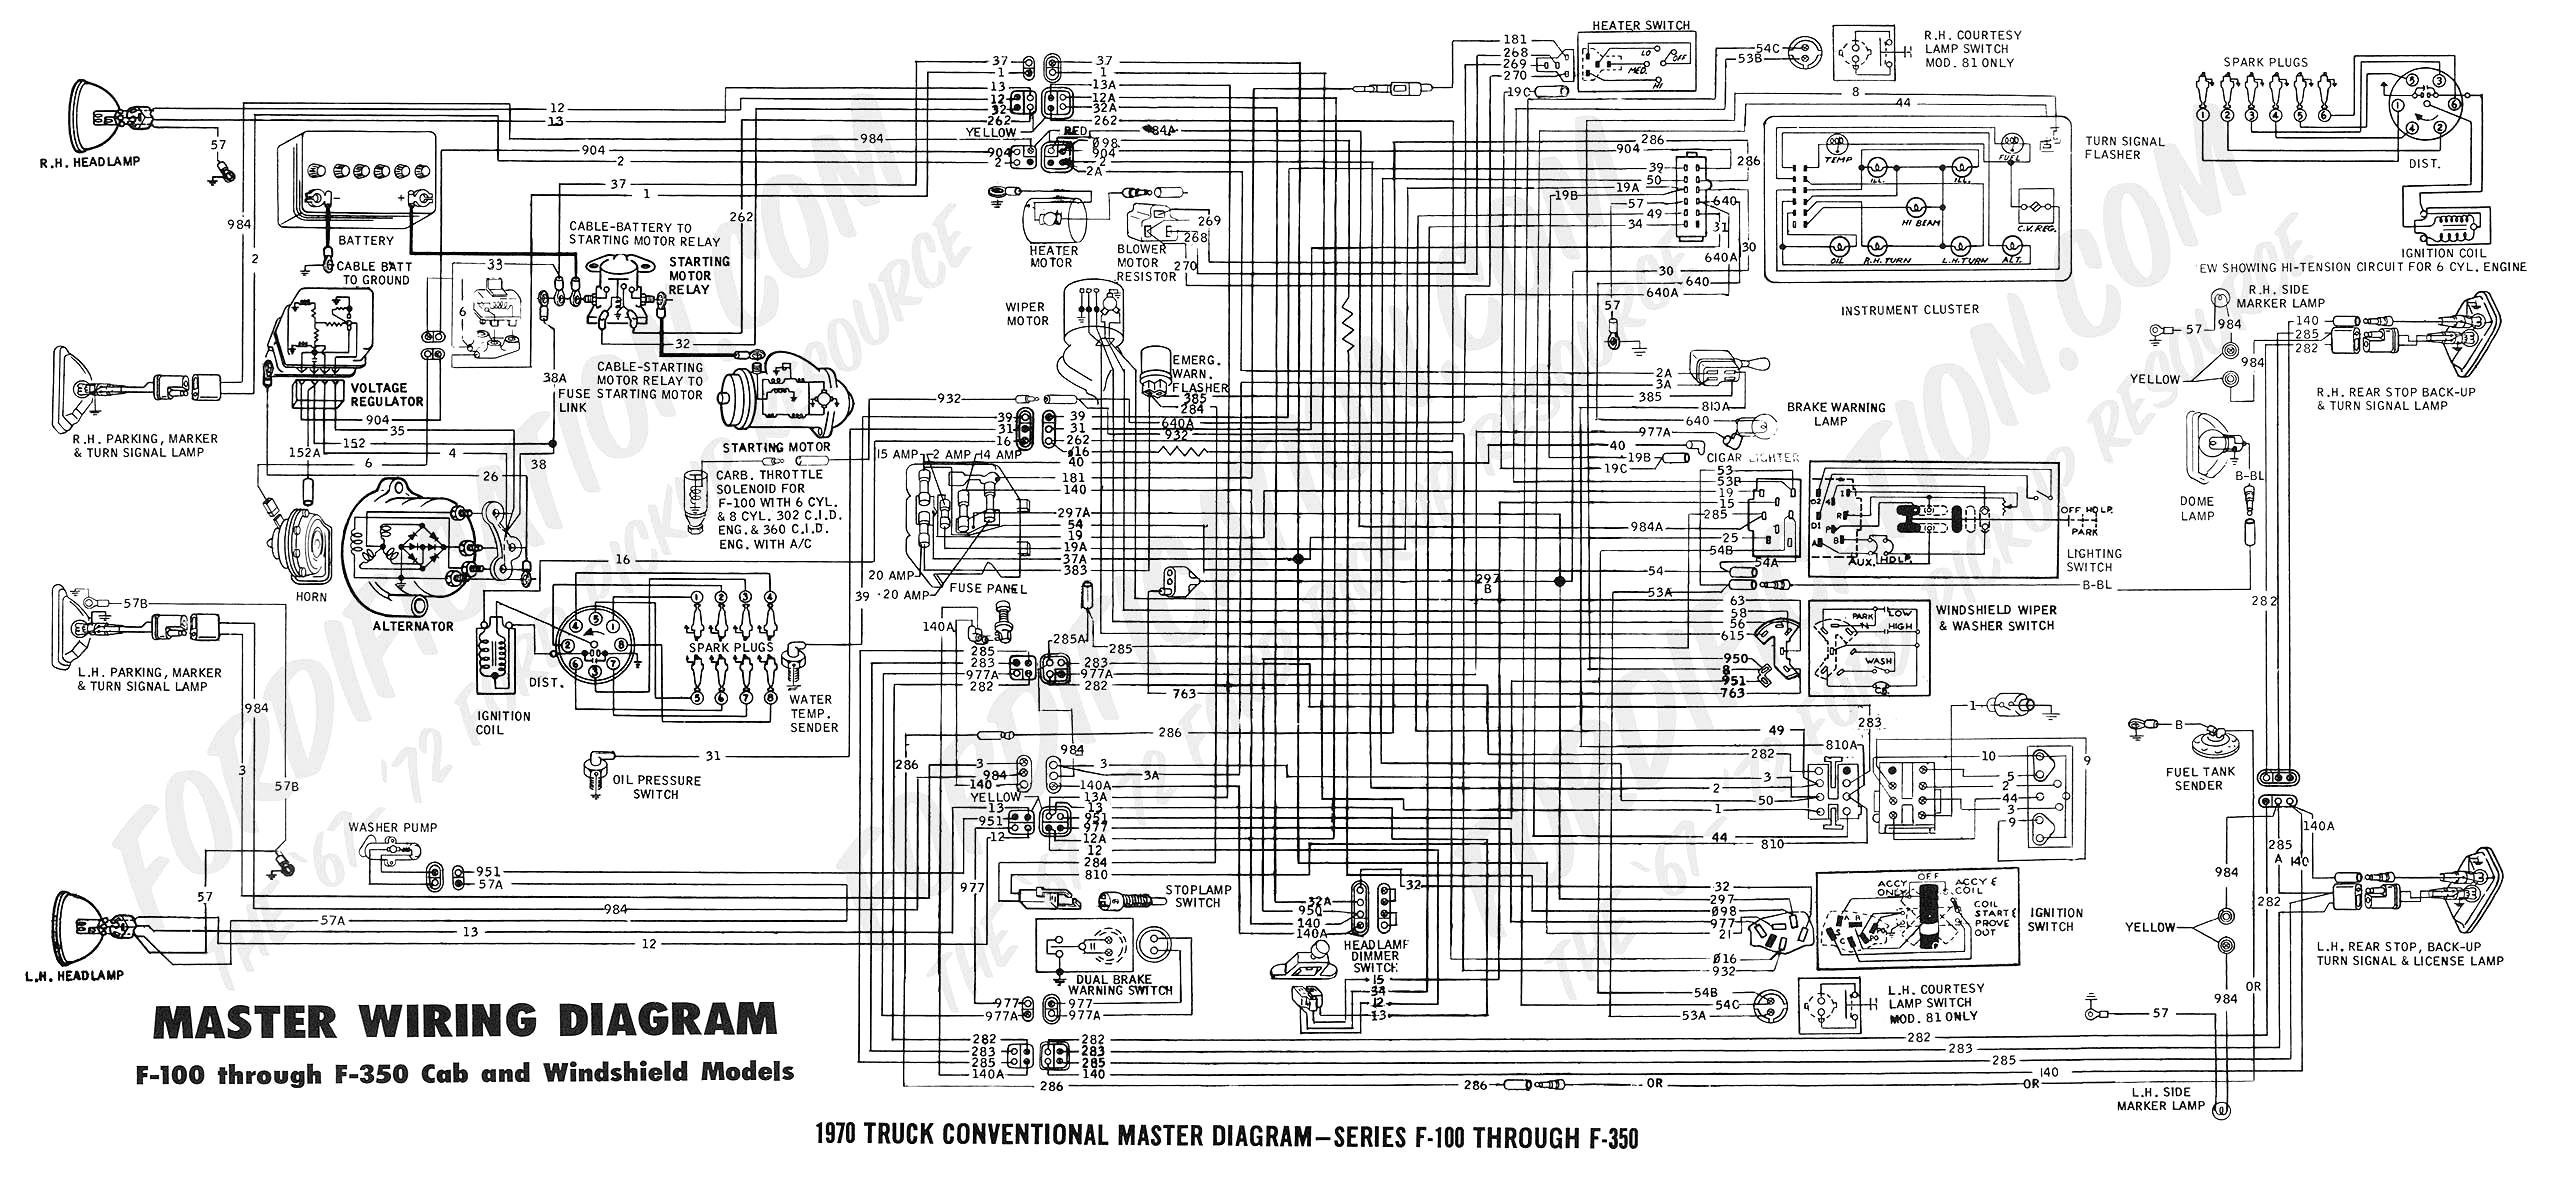 97 Honda Accord Transmission Diagram 1985 Honda Accord Axle Diagram Wiring Schematic Wiring Data Of 97 Honda Accord Transmission Diagram